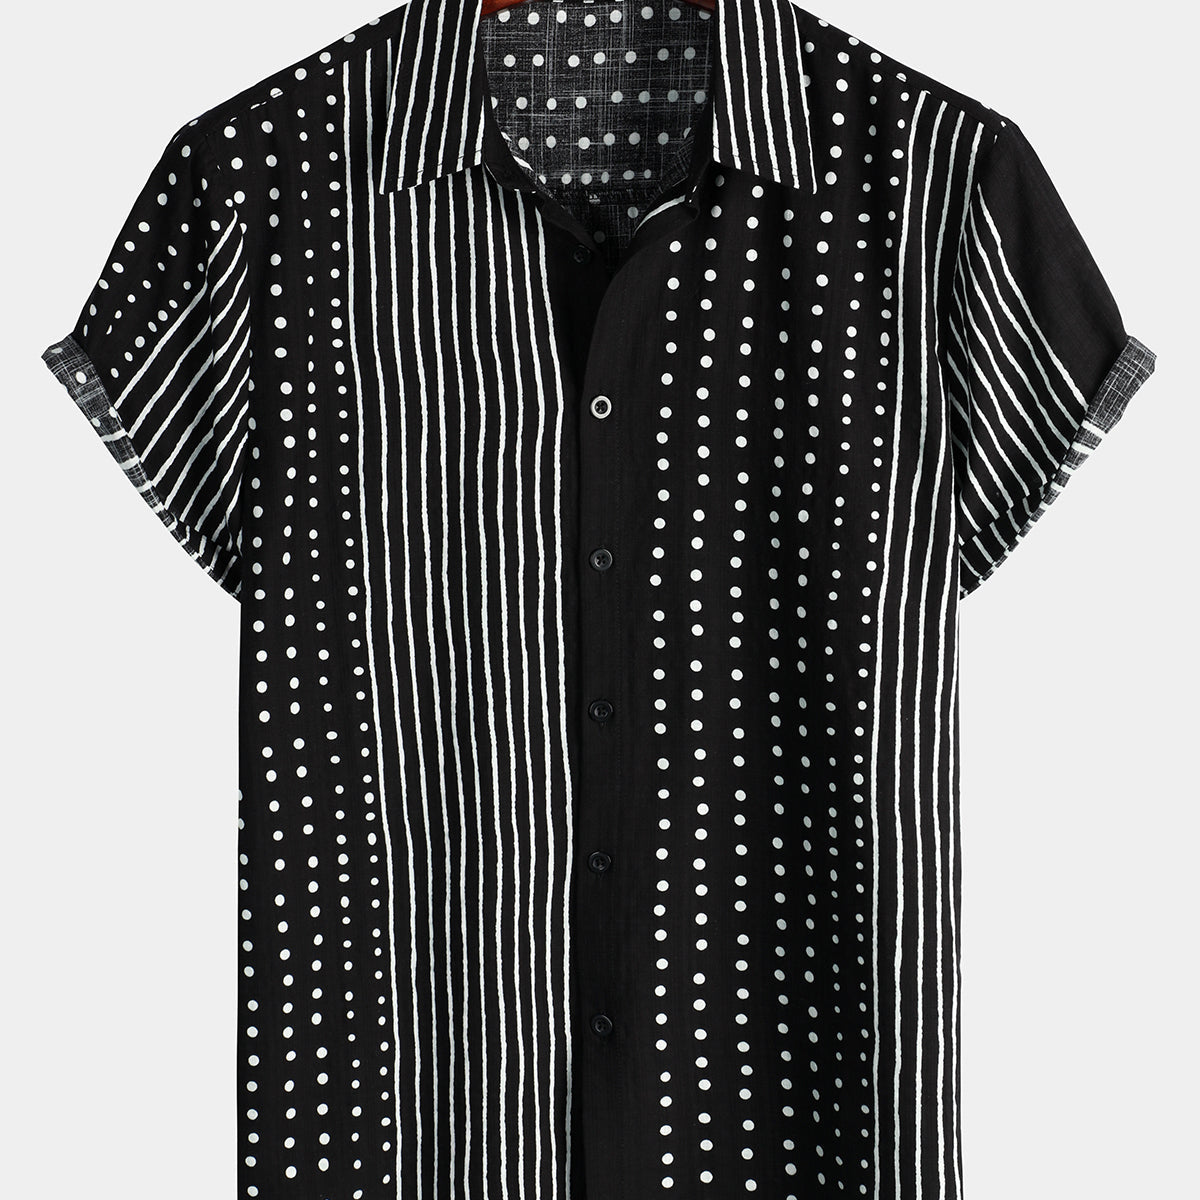 Men's Retro Black Striped and Polka Dot Button Up Short Sleeve Shirt